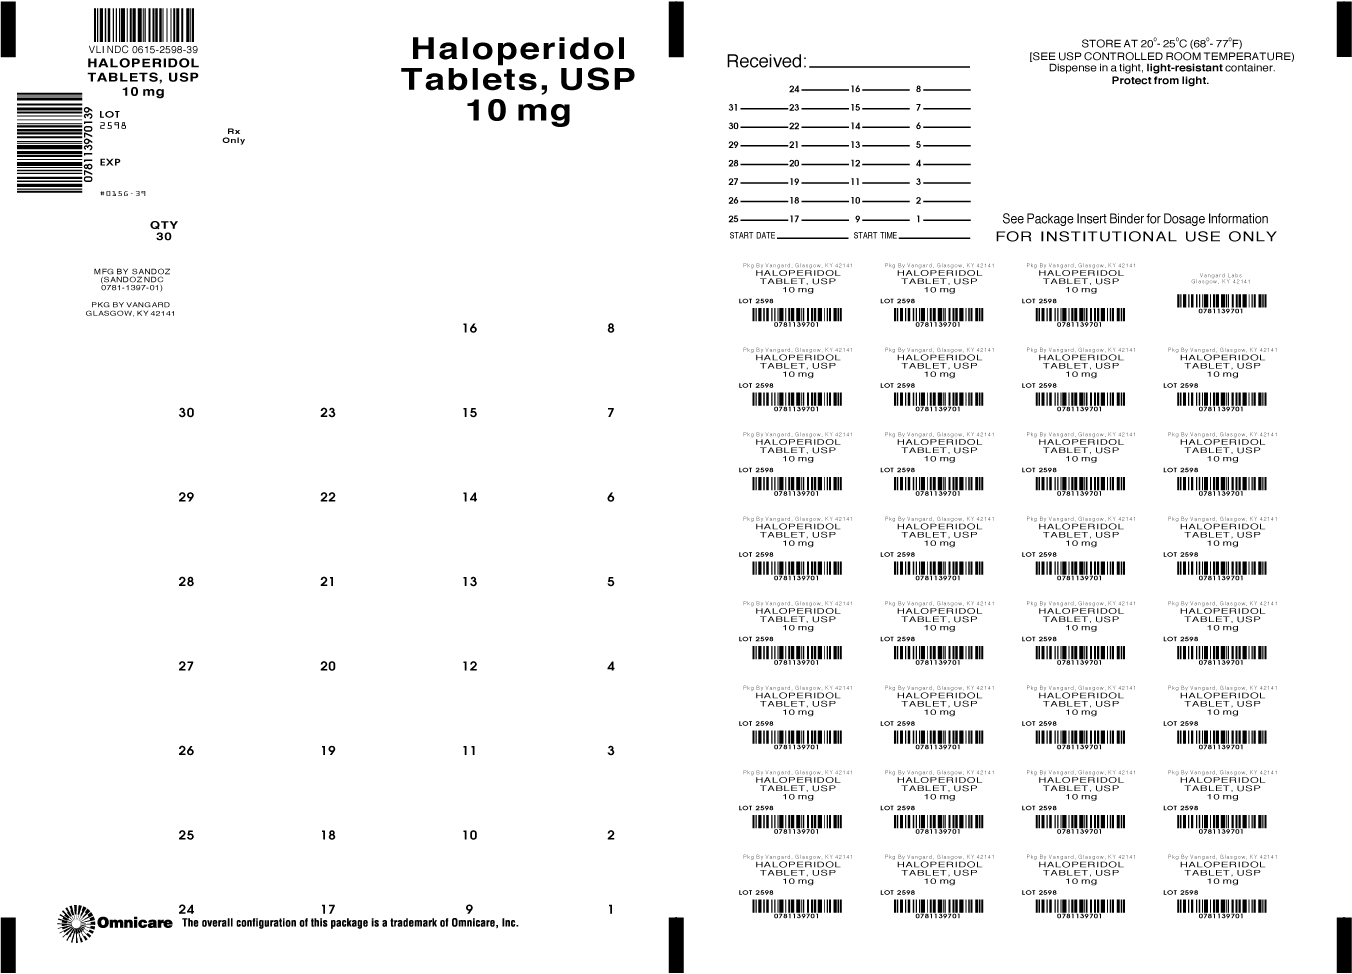 Haloperidol Tablets, USP 10mg